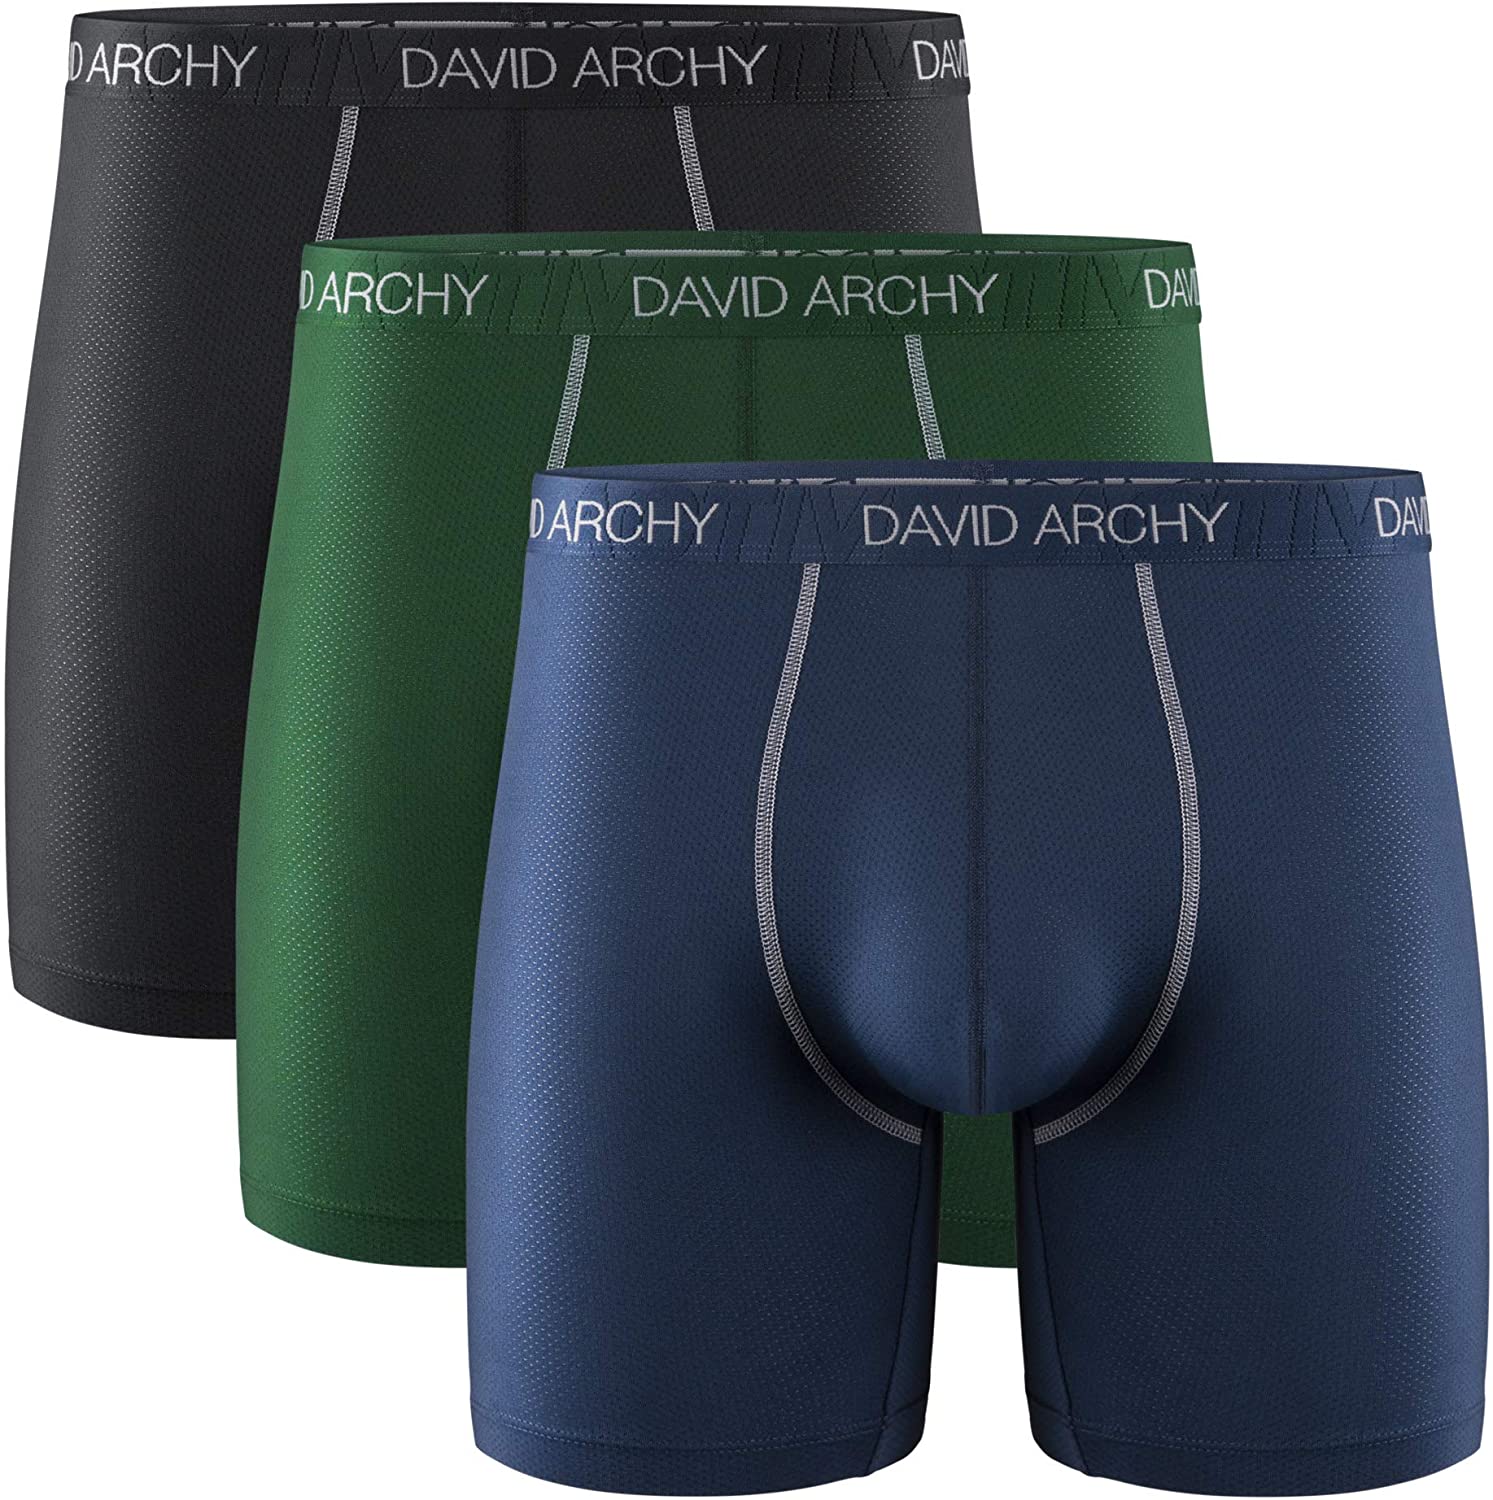 david archy underwear